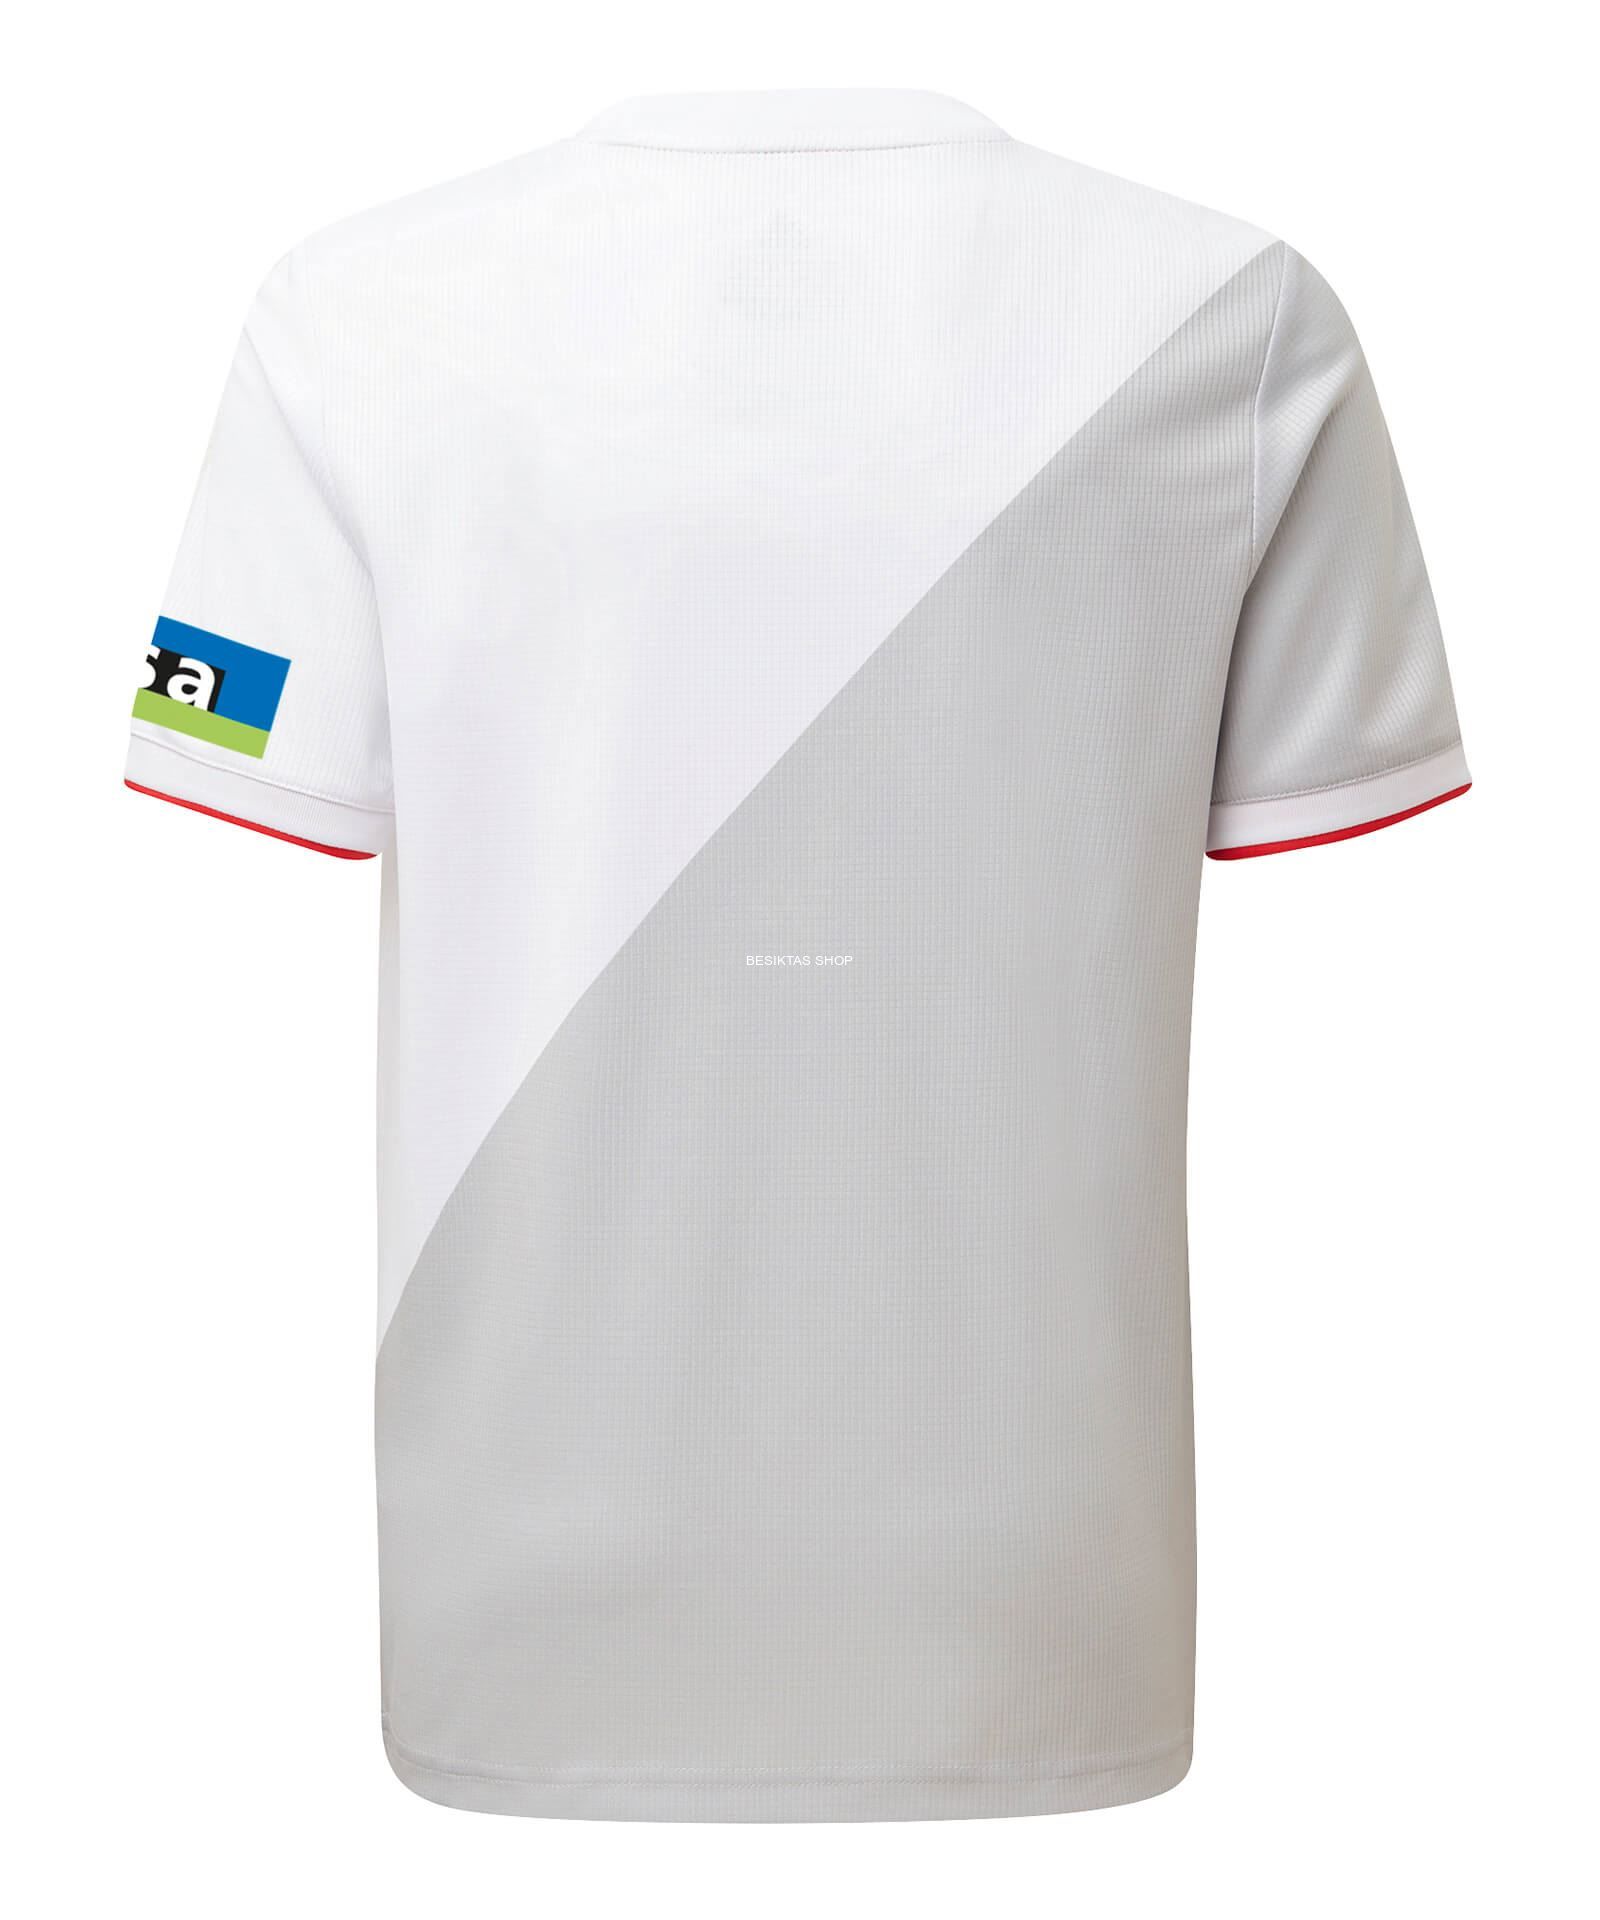 Besiktas 2021 / 2022 Season White Home Jersey Shirt Adidas Official DHL  2021